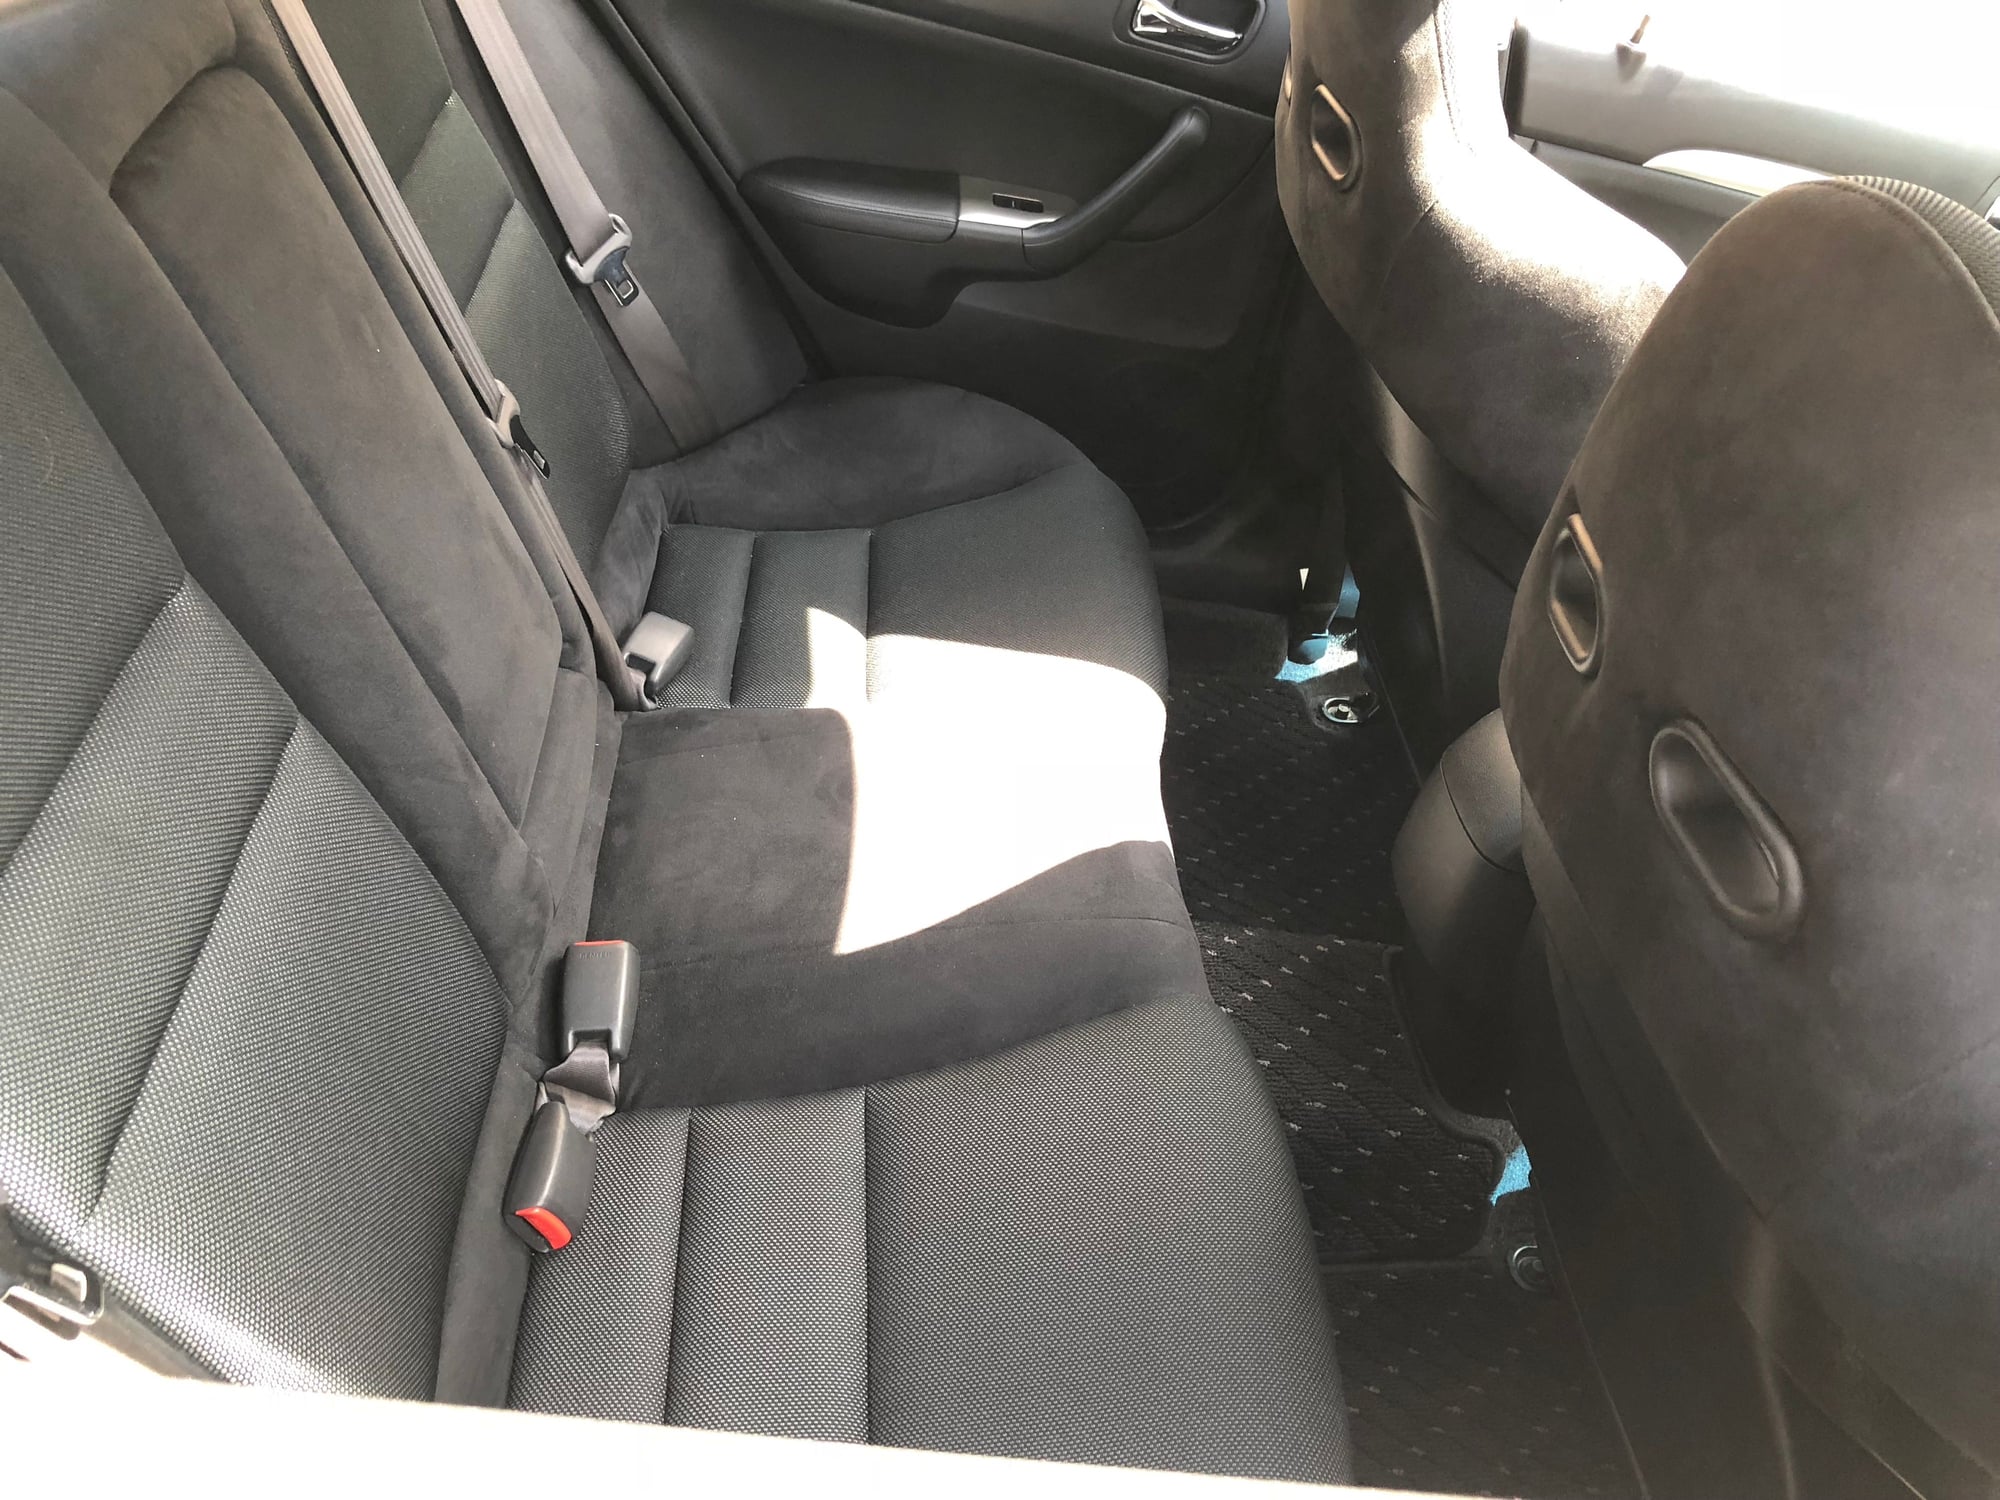 Closed Jdm Euro R Recaro Interior Swap Cl7 Accord Acura Tsx 1st Gen Seats Consol Mats